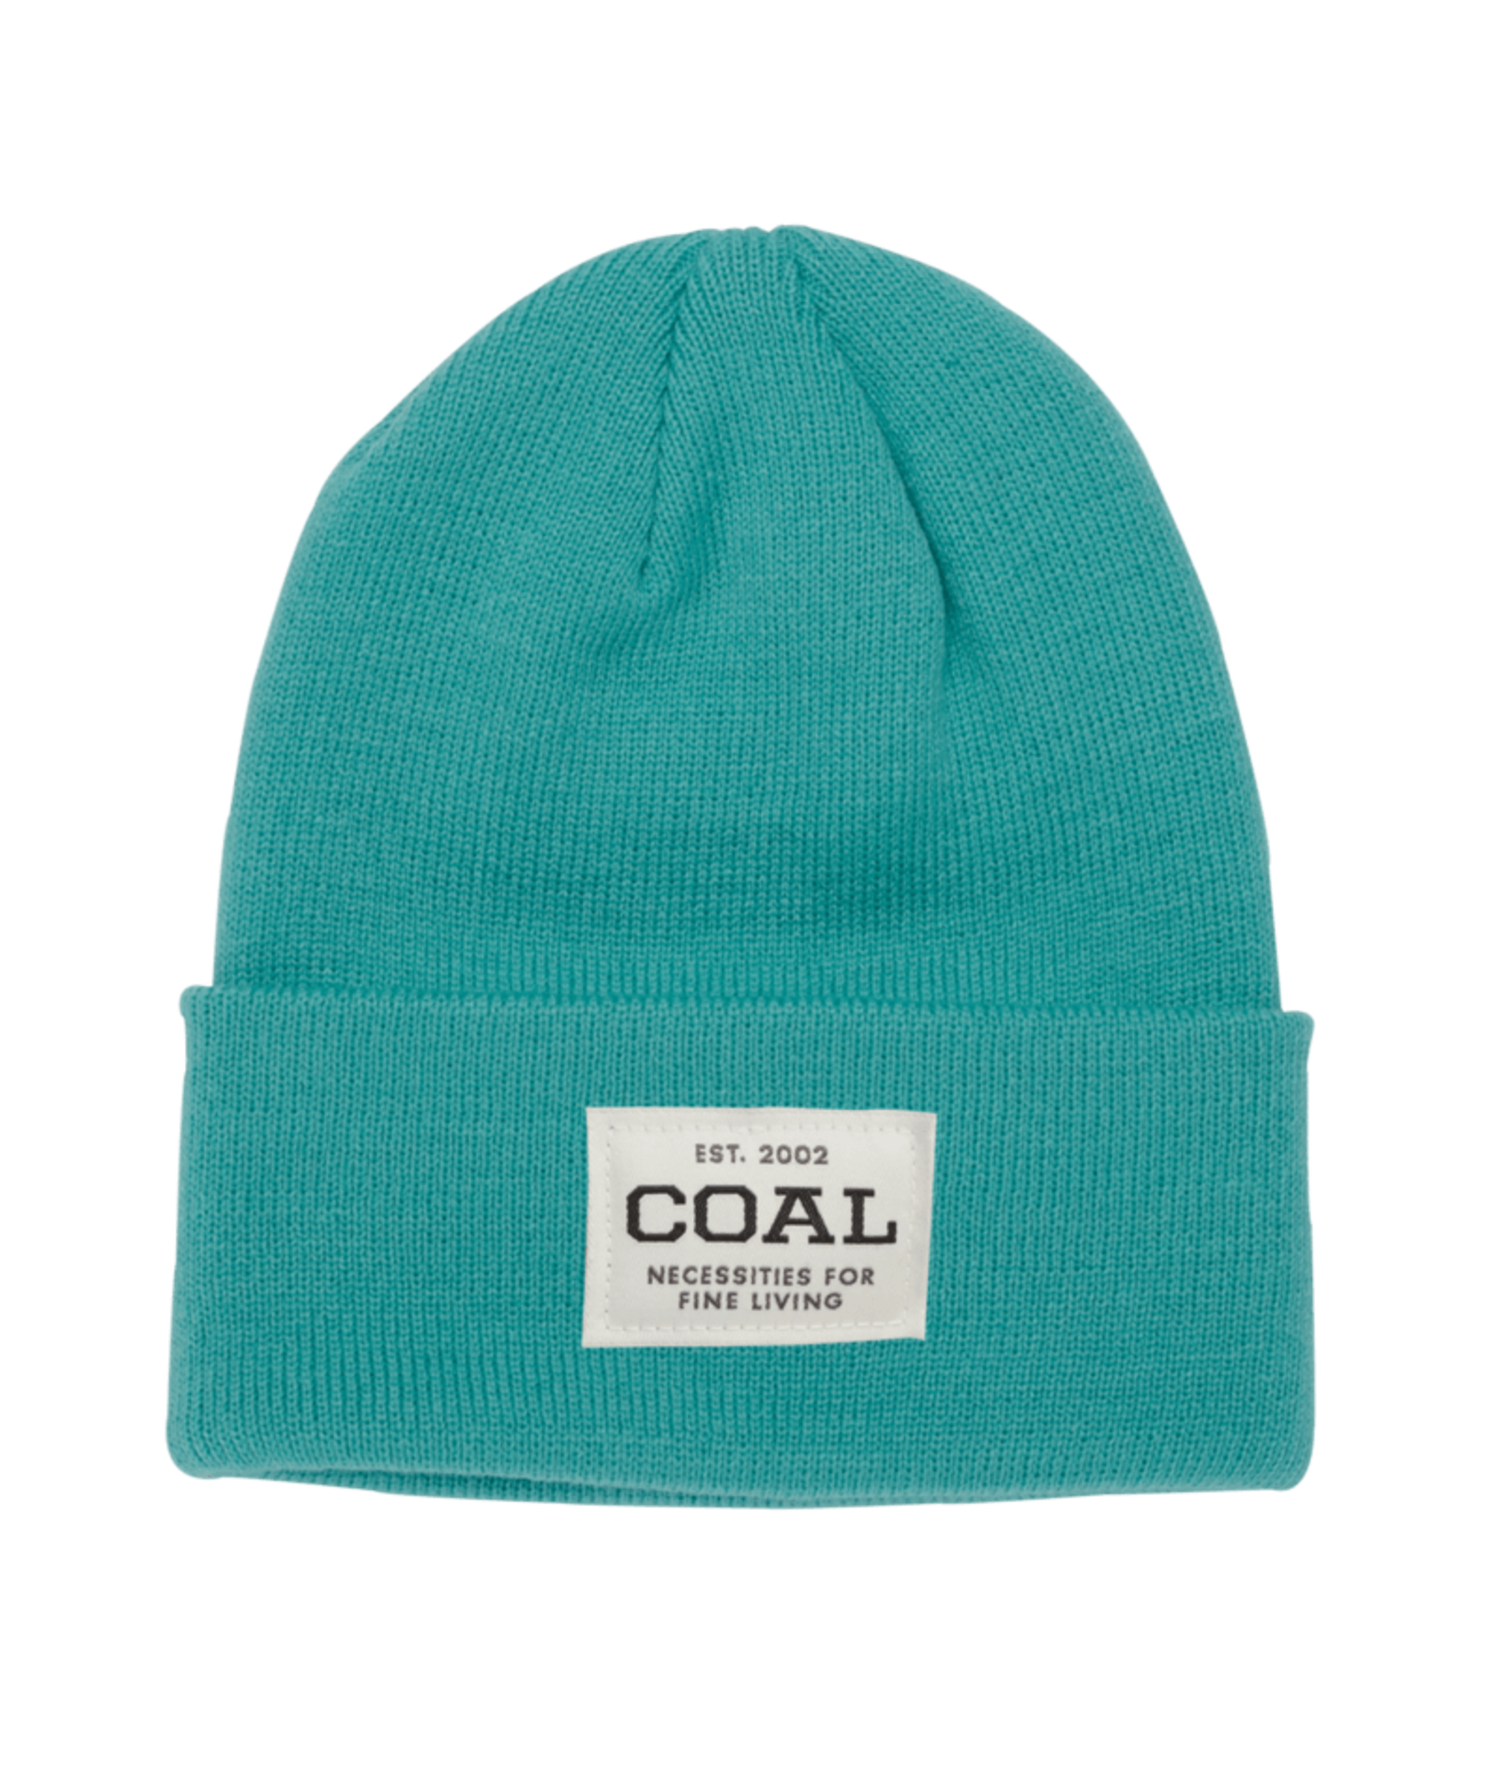 The Uniform Kids Recycled Knit Cuff Beanie – Coal Headwear